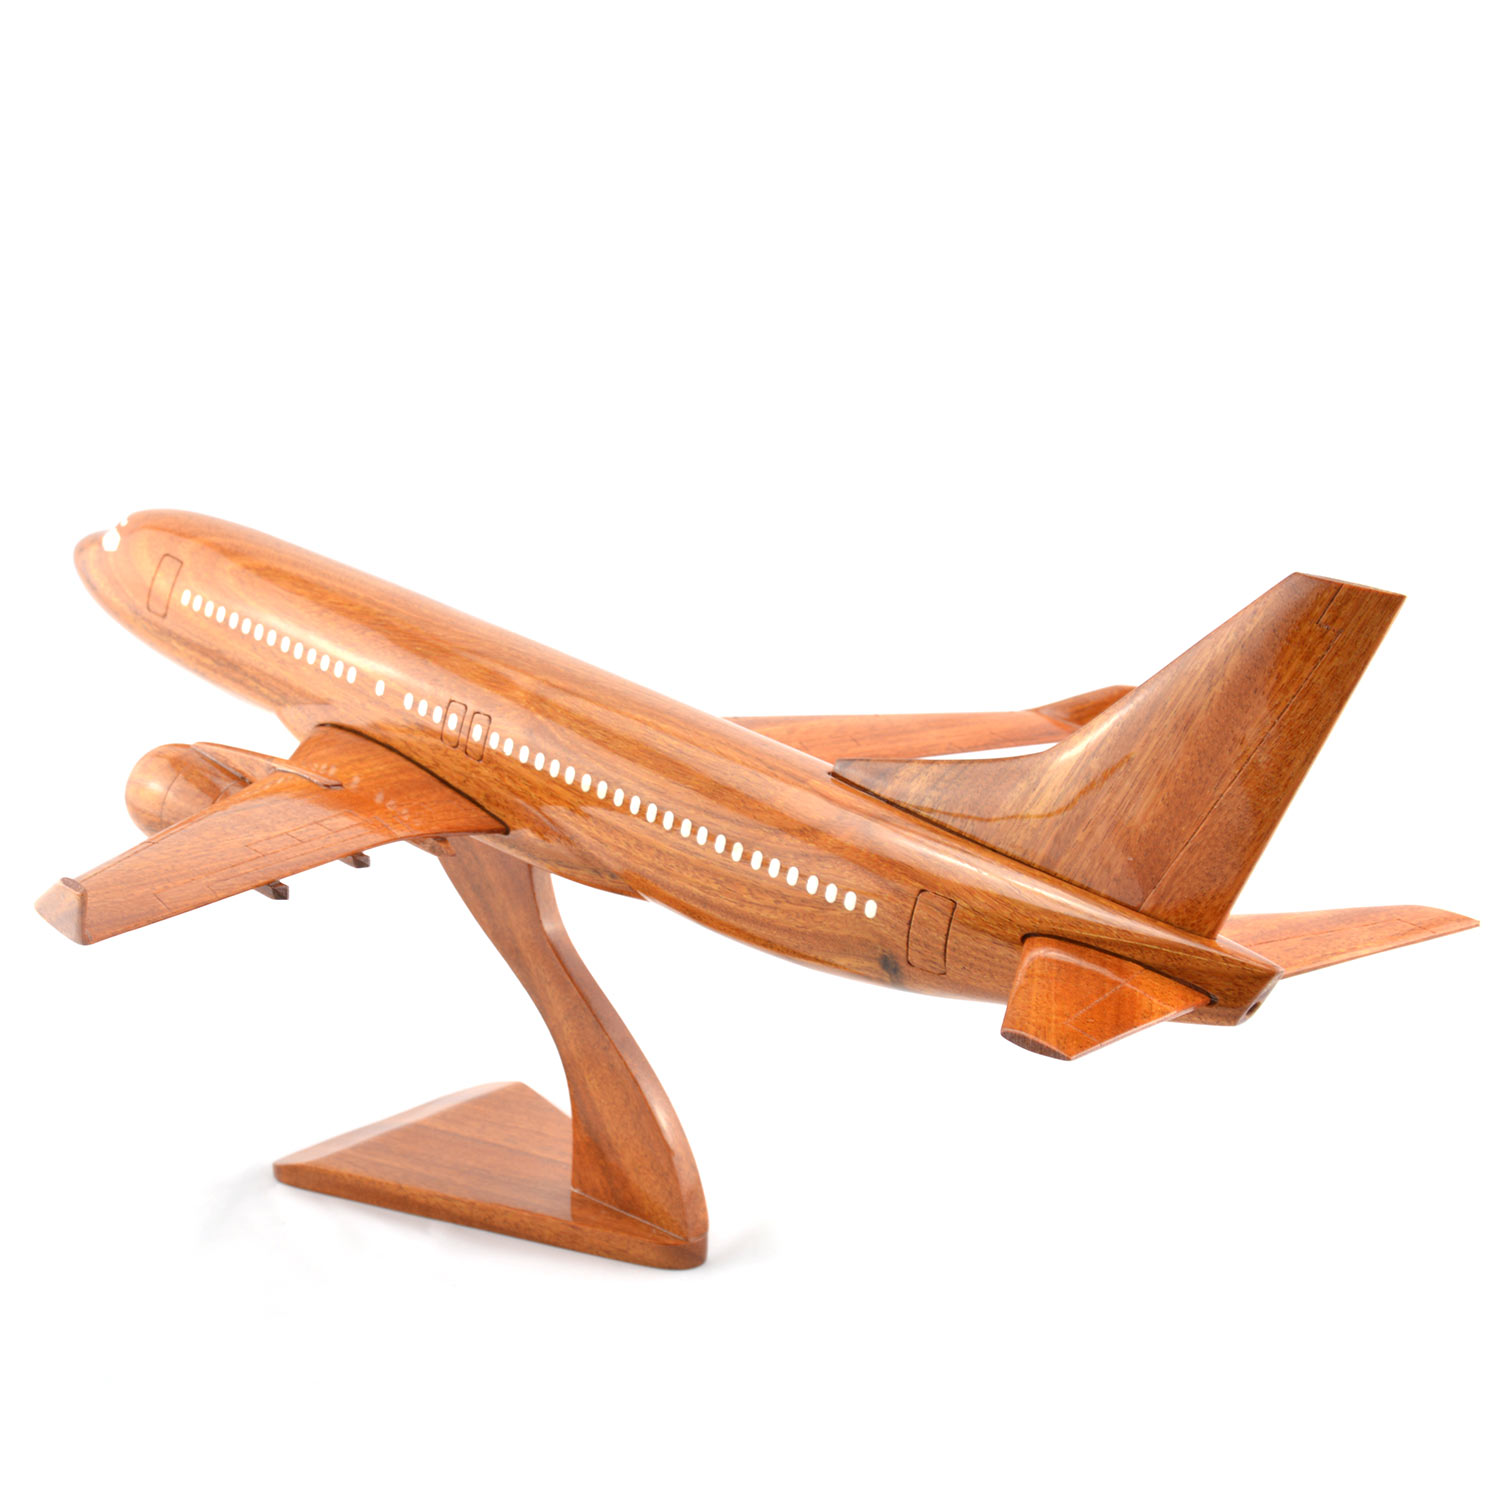 Boeing 737 Wooden Airplane Model5 